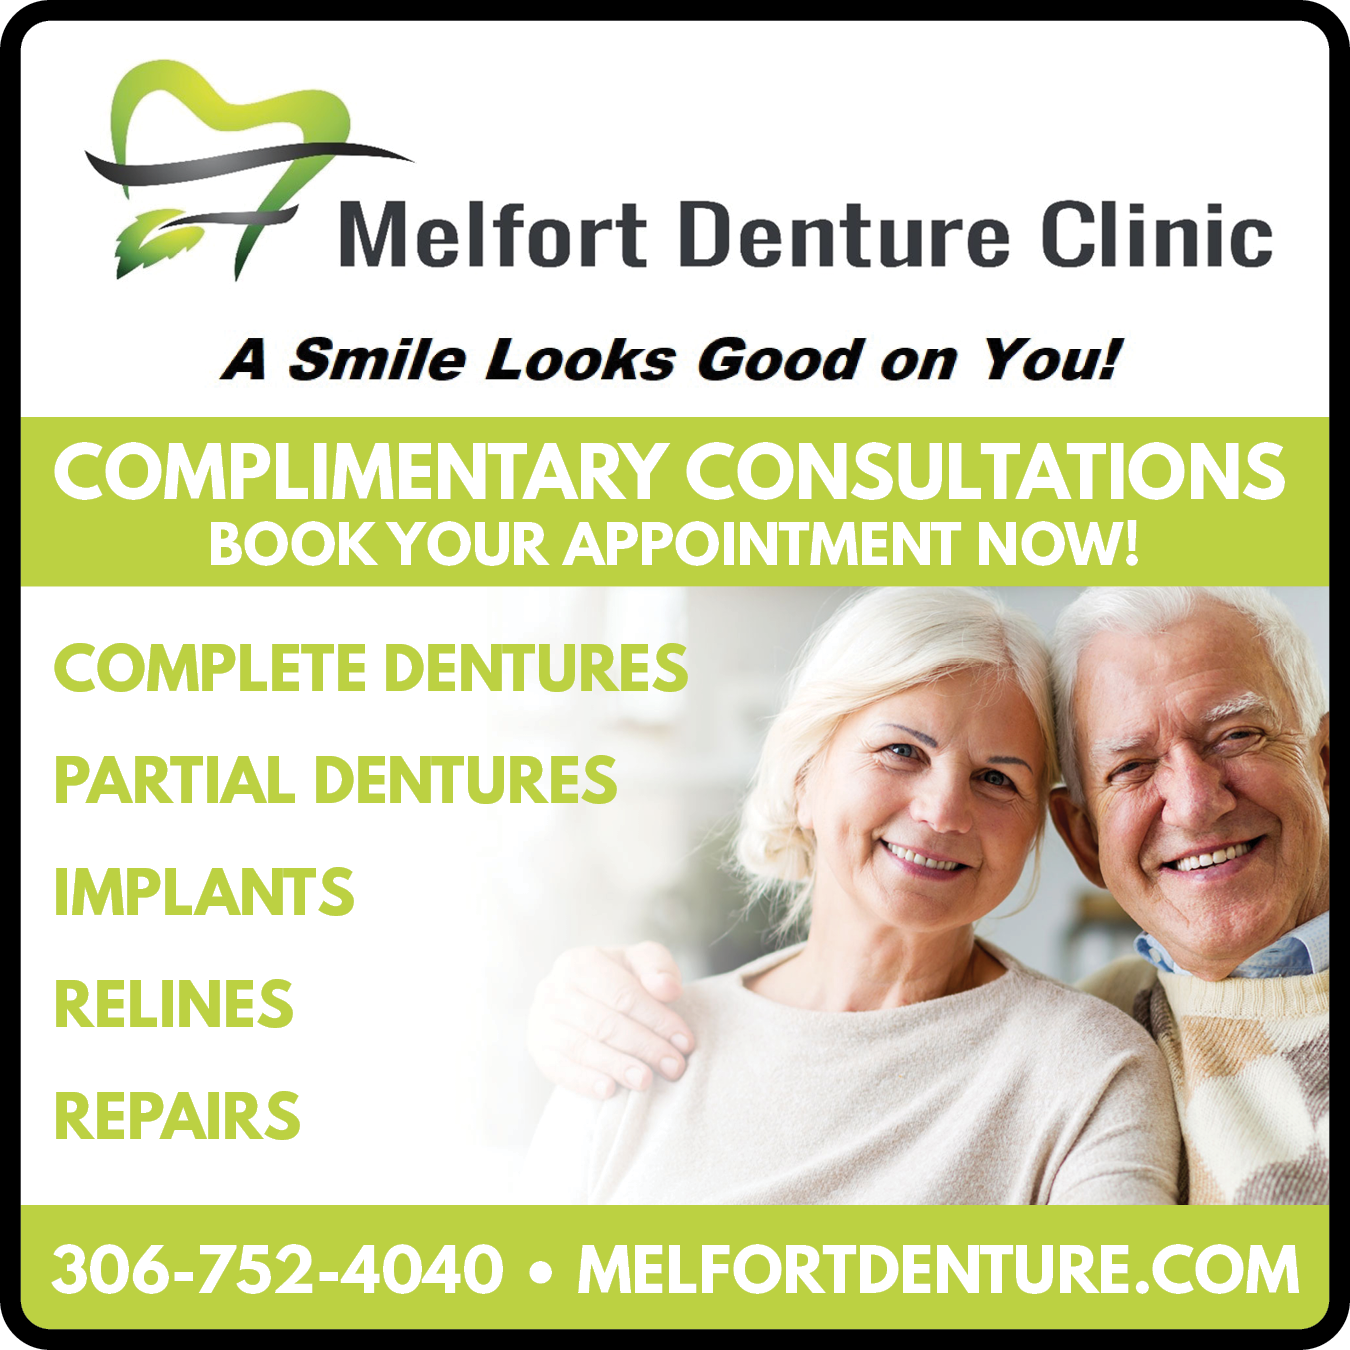 Melfort Denture Clinic